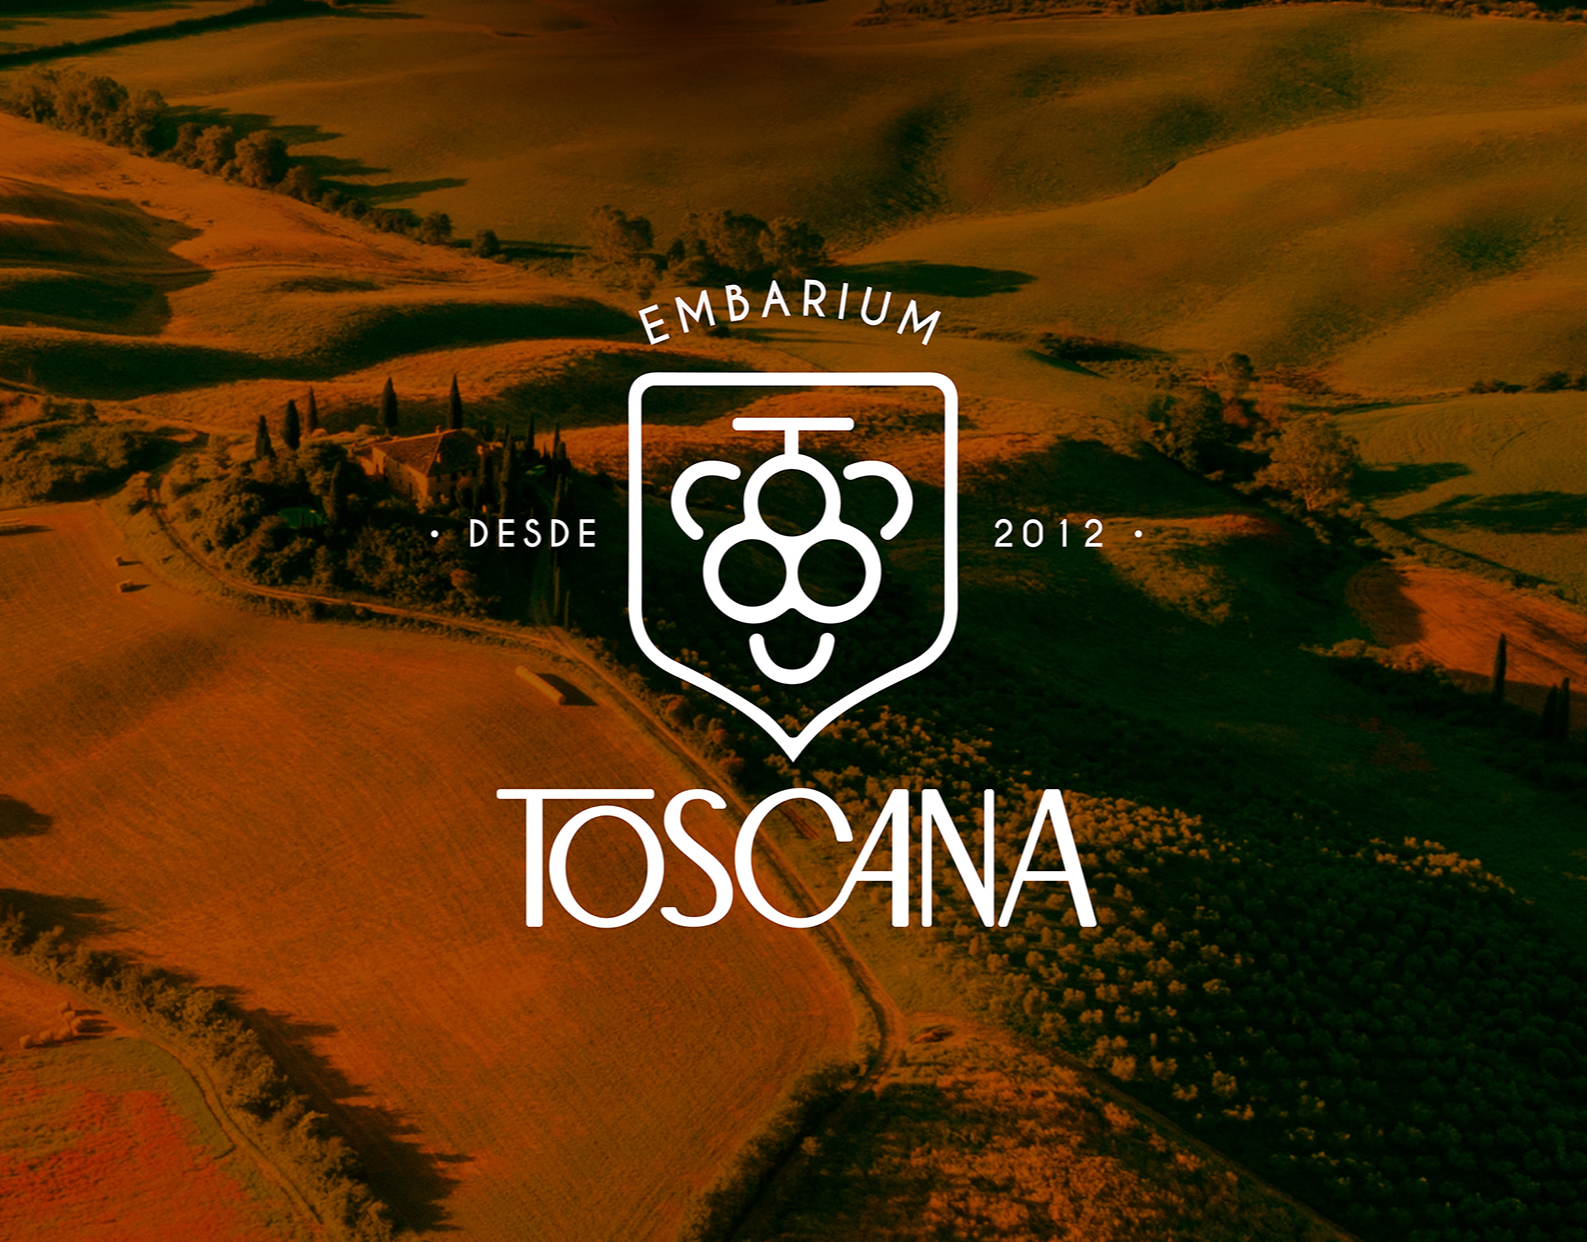 Embarium Toscana - Rebranding